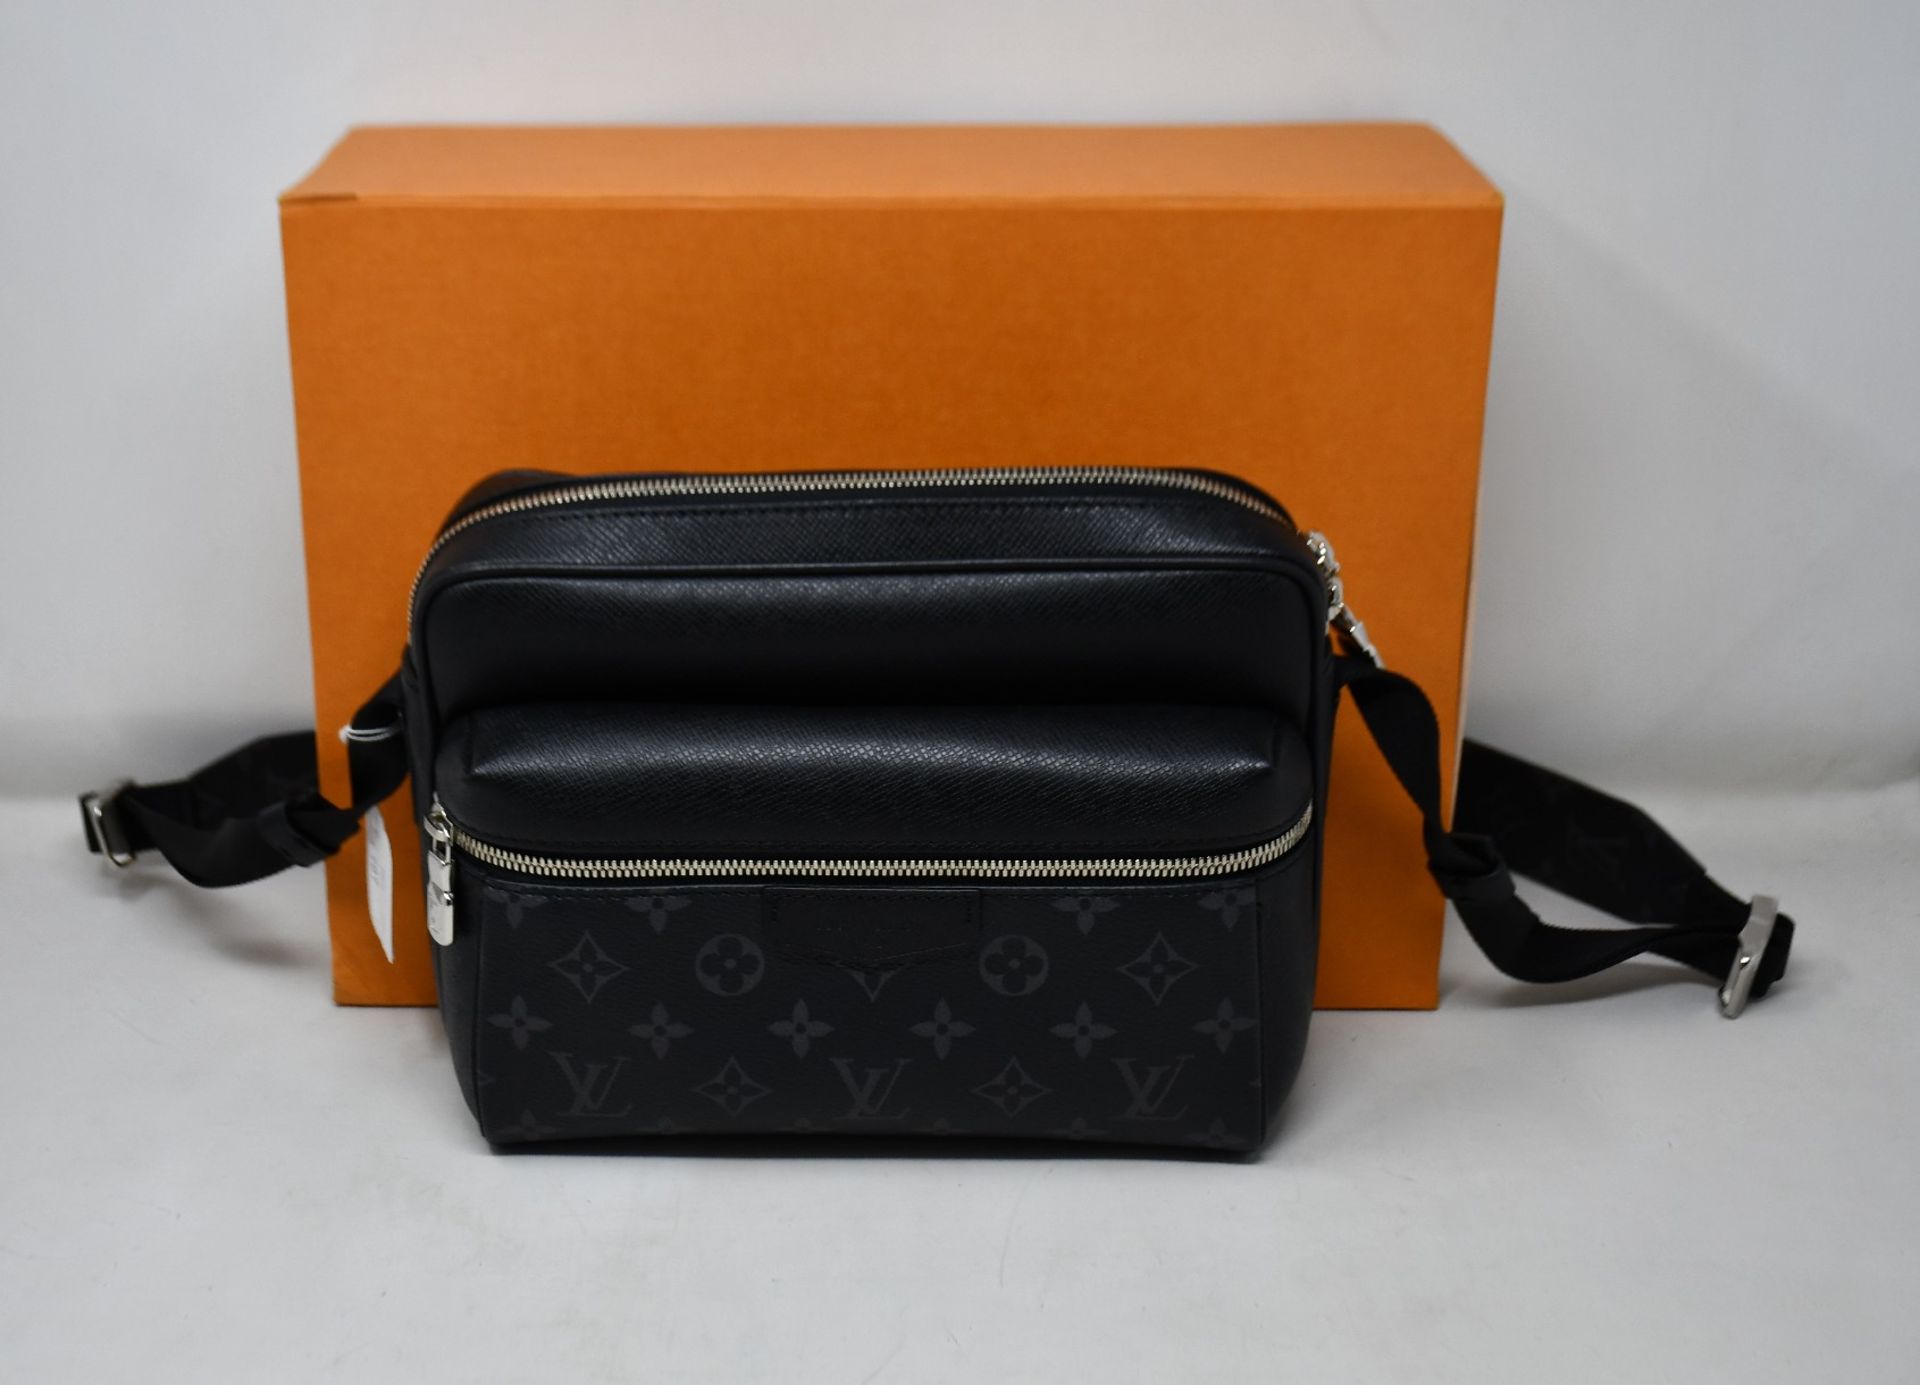 An as new Louis Vuitton Outdoor Messenger bag in black (RRP £1550).